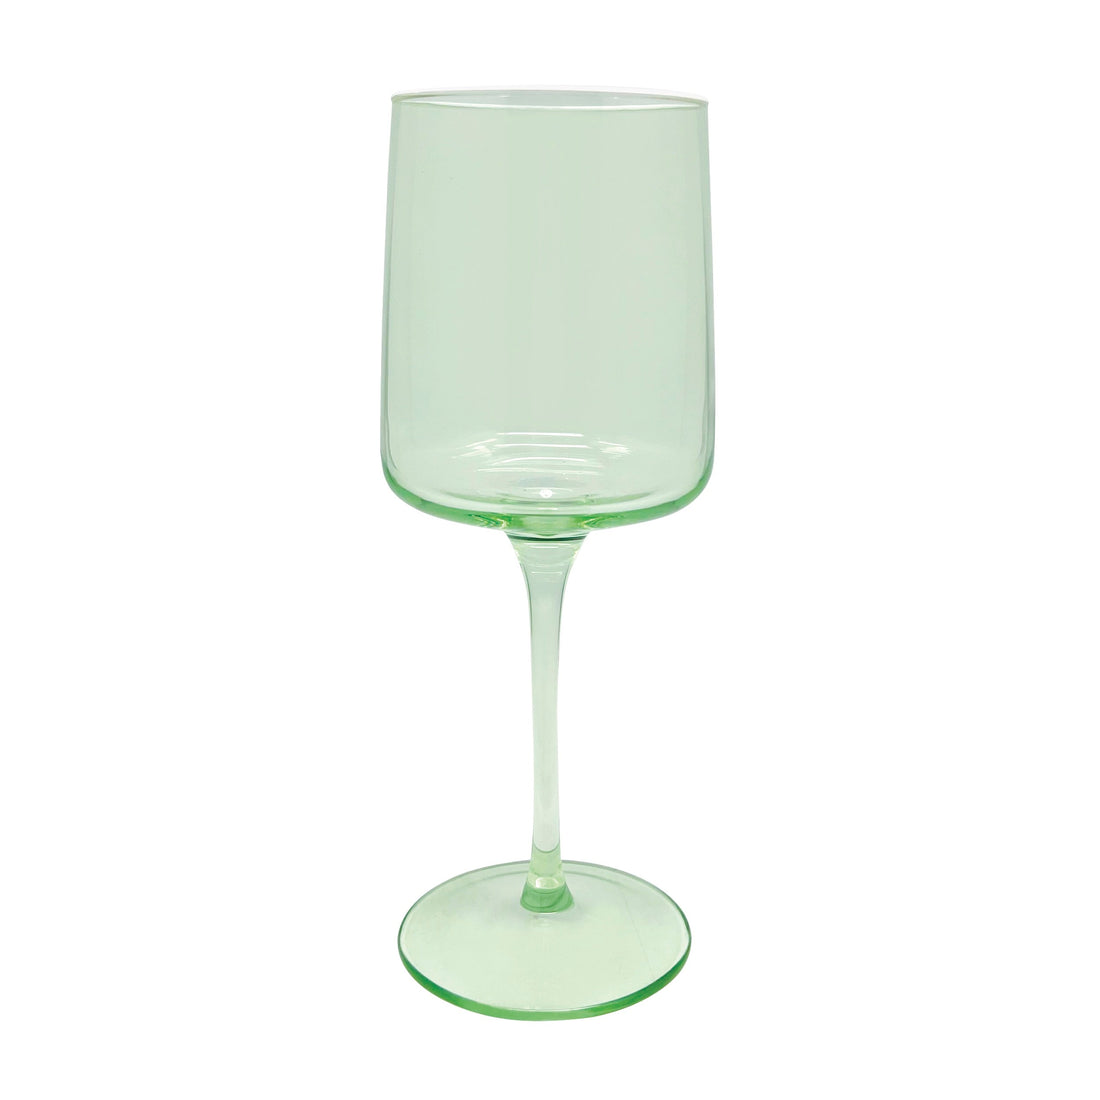 Fine Line Light Green with White Rim Wine Glass Set of 4